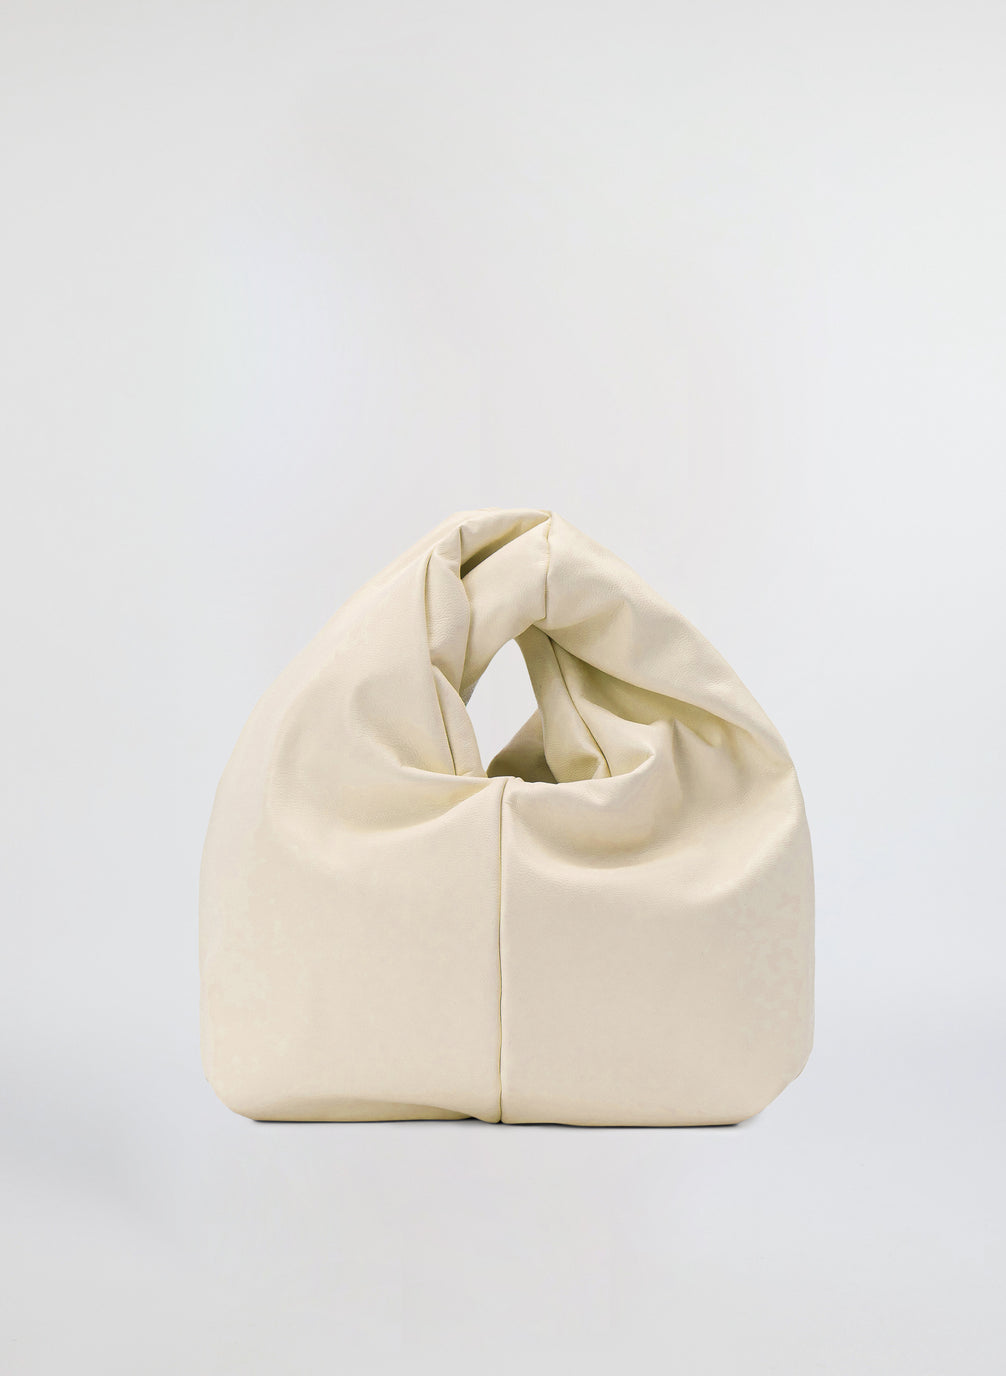 Simone Vegan Leather Bag